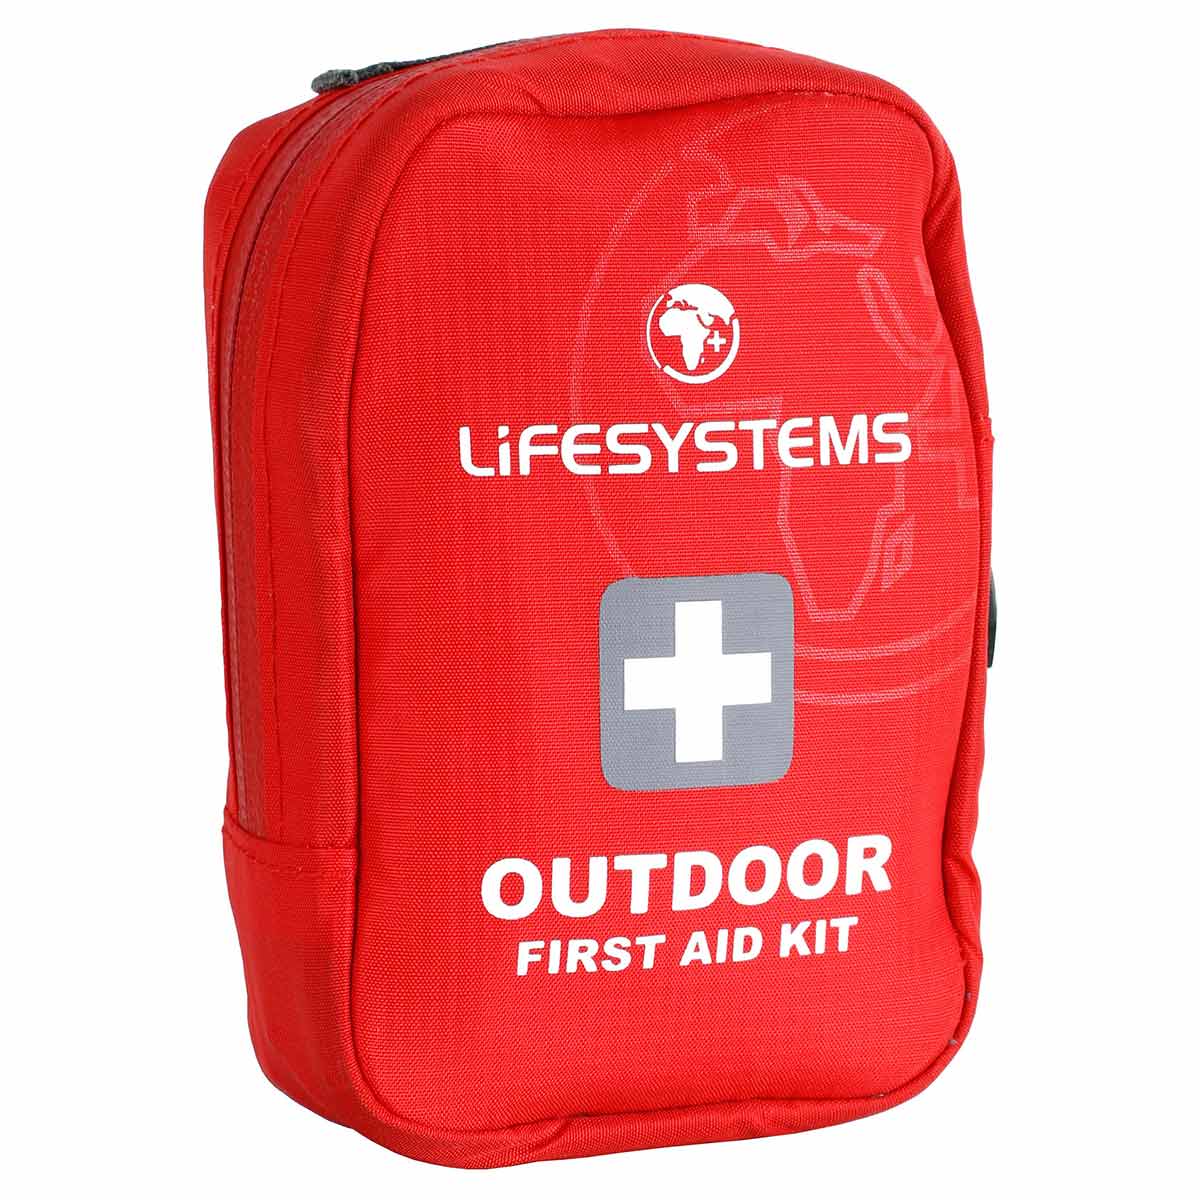 Apteczka LifeSystems Outdoor First Aid Kit